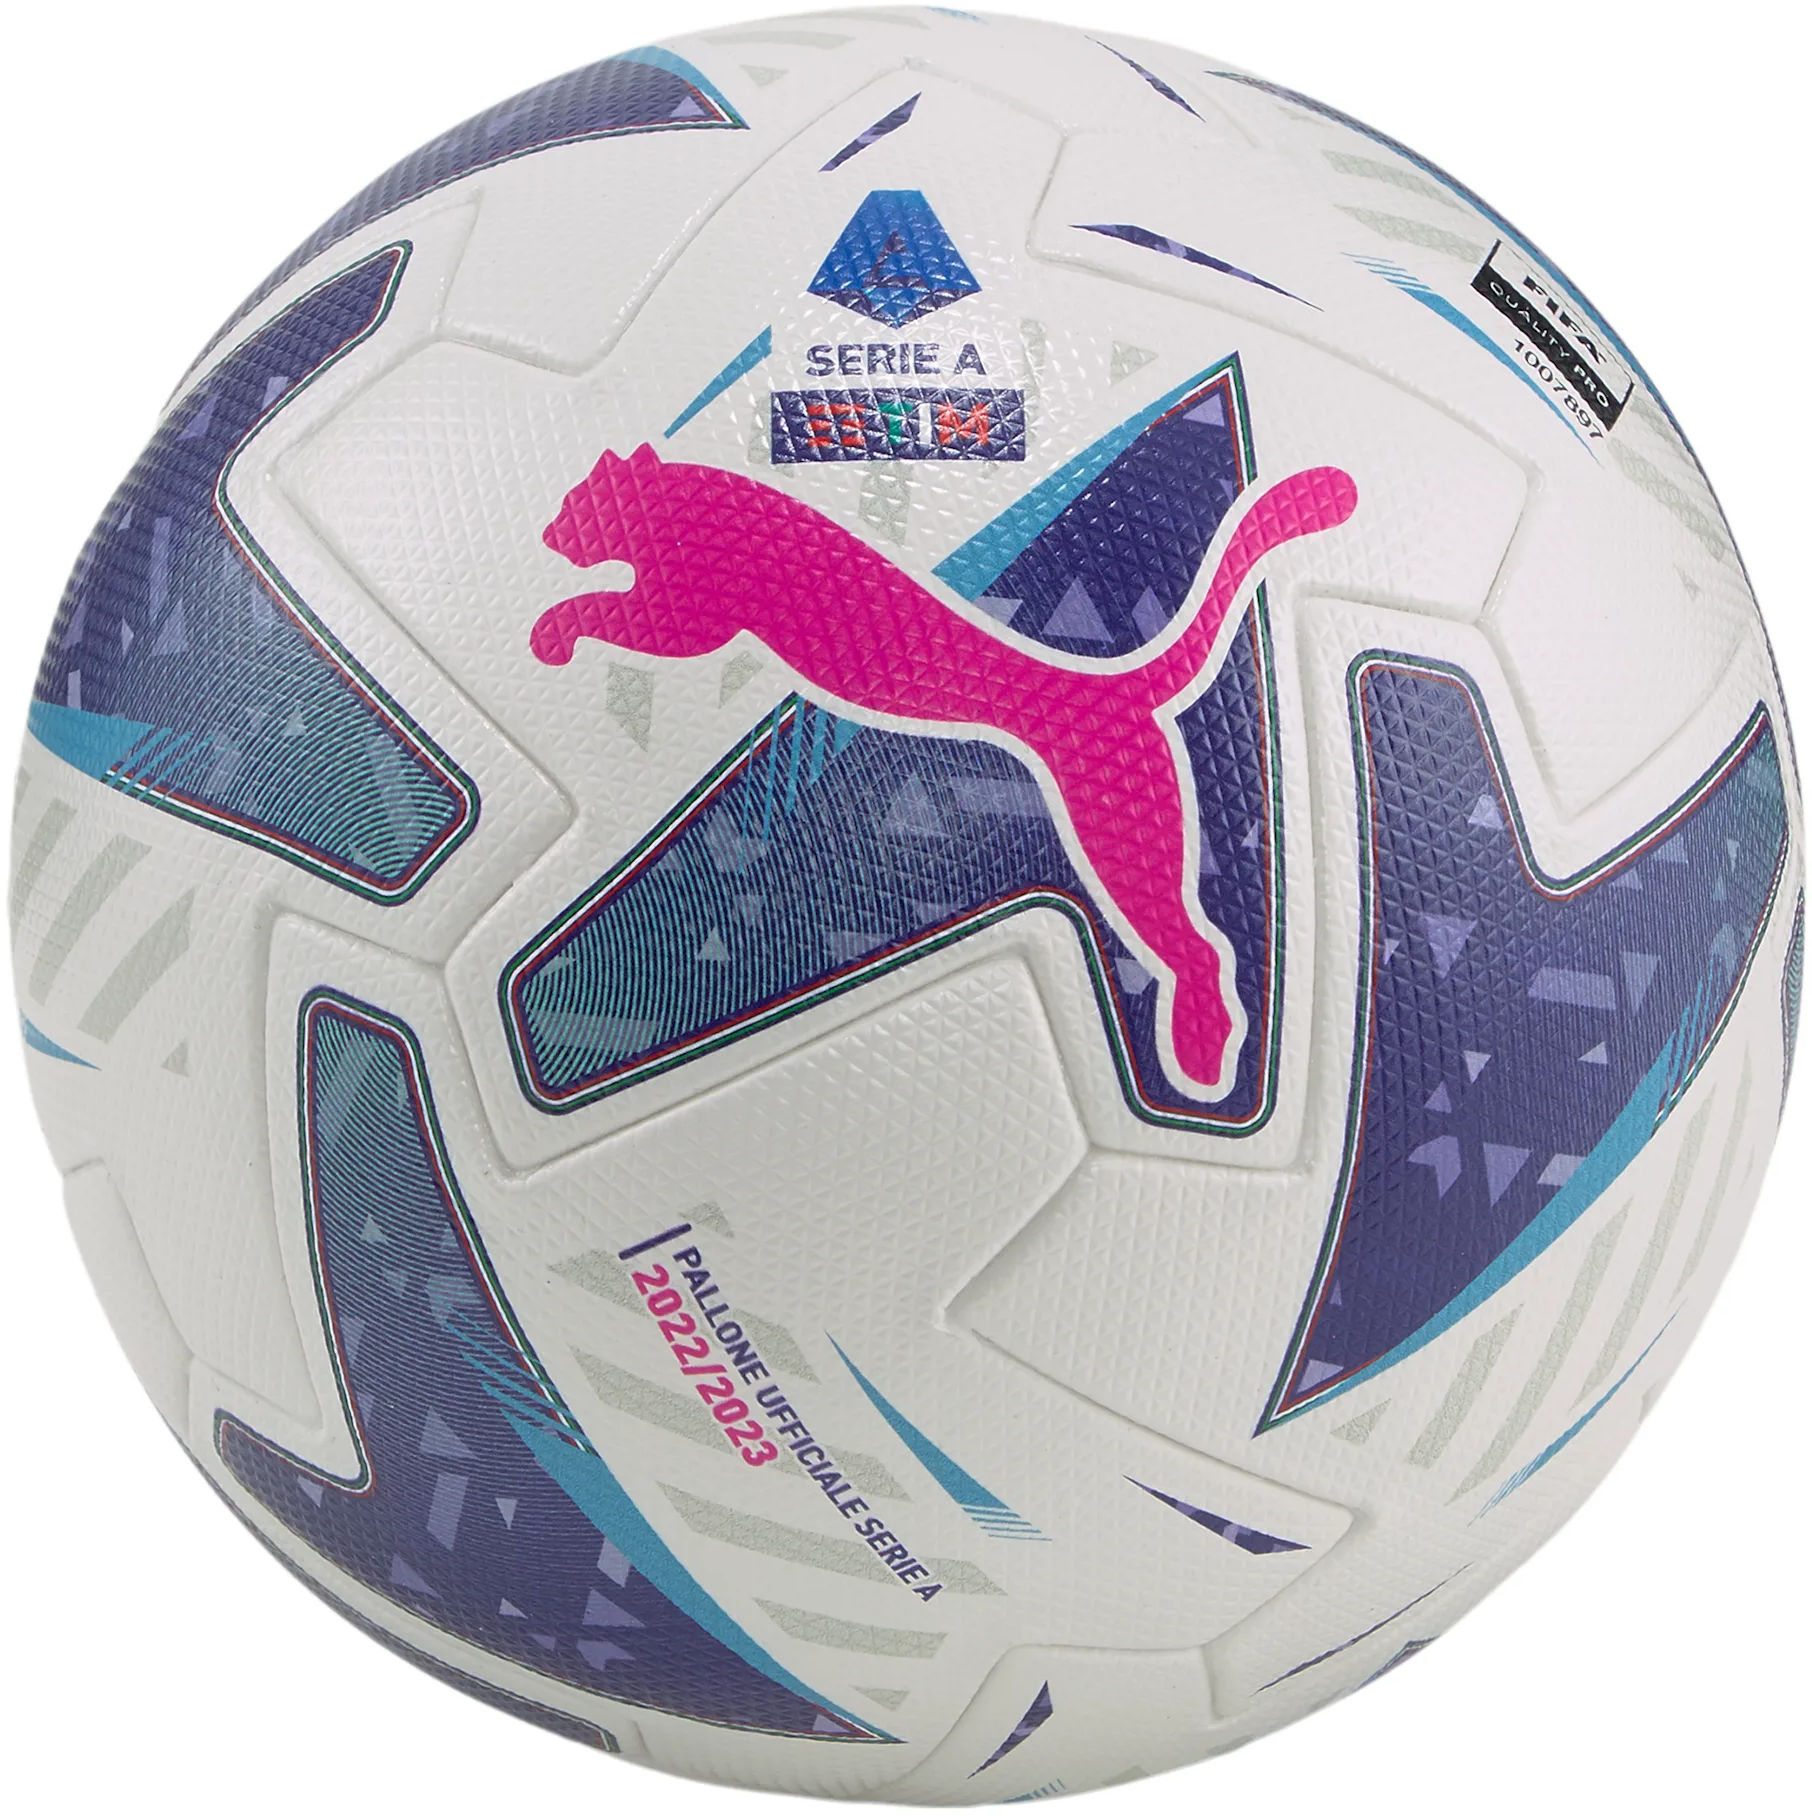 Balón Puma Orbita Serie A (FIFA Quality Pro)